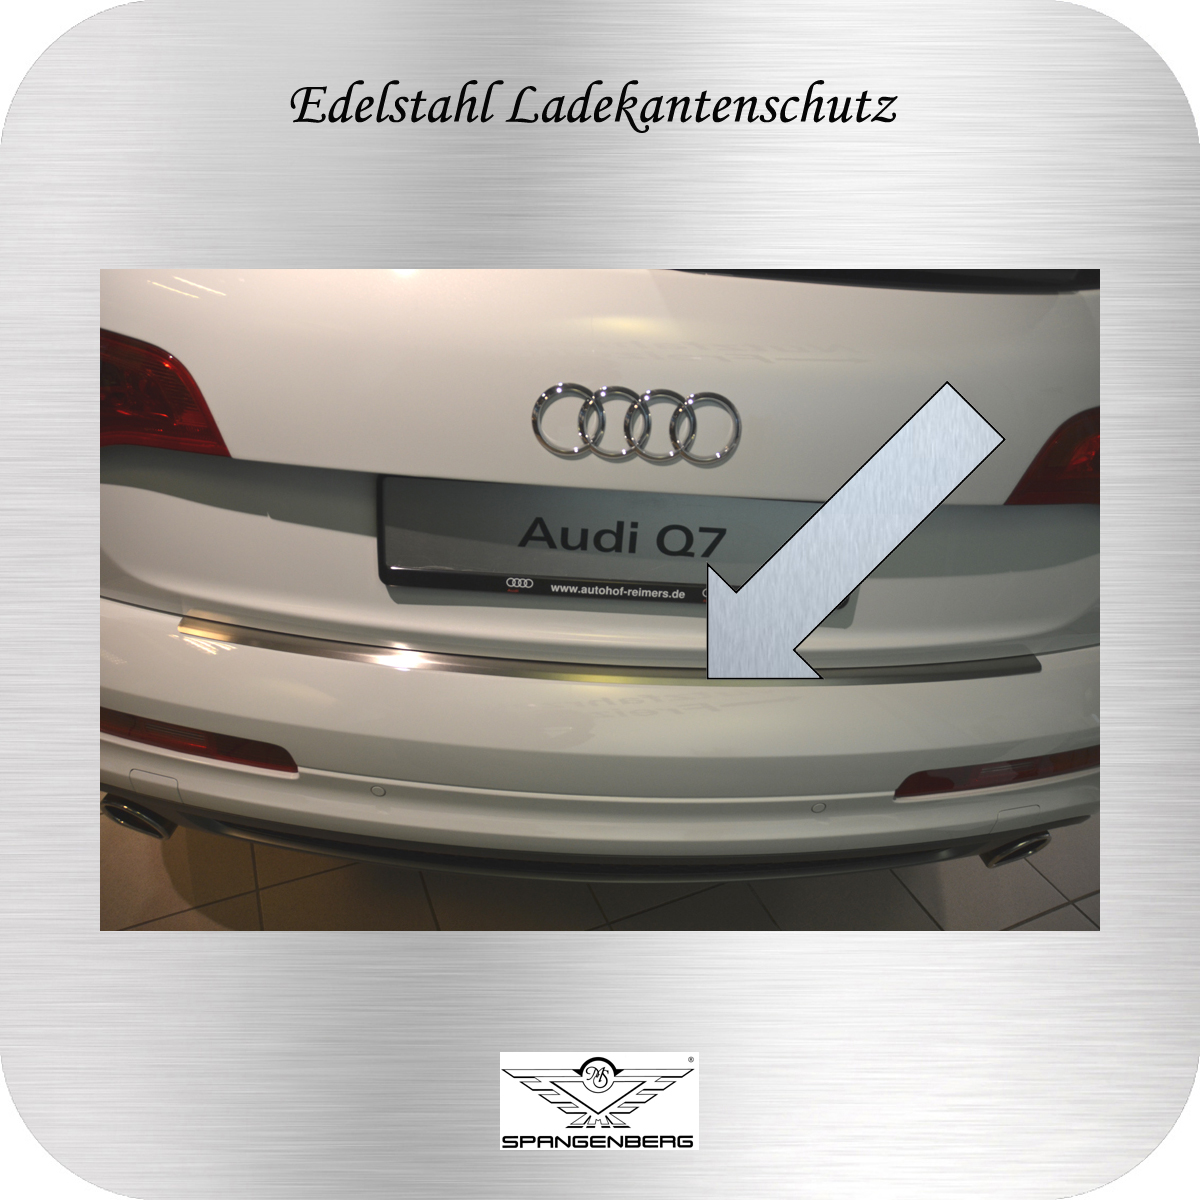 2006-06/2015 Edelstahl Ladekantenschutz für Audi Q7 4L Quattro S-Line Bj